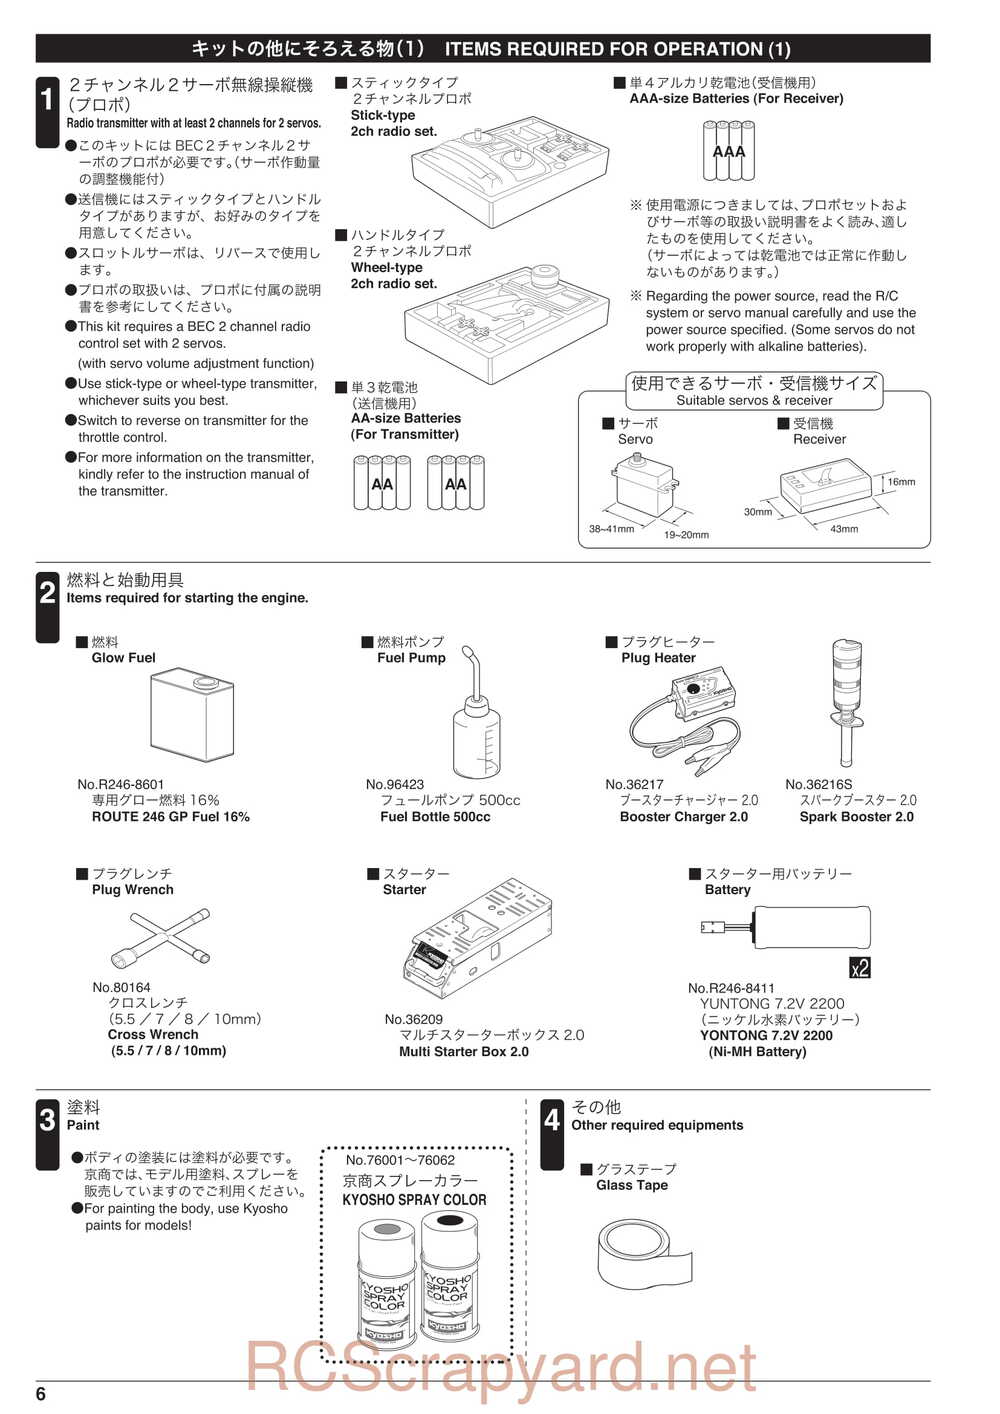 Kyosho - 31007 - KF01 - Manual - Page 06